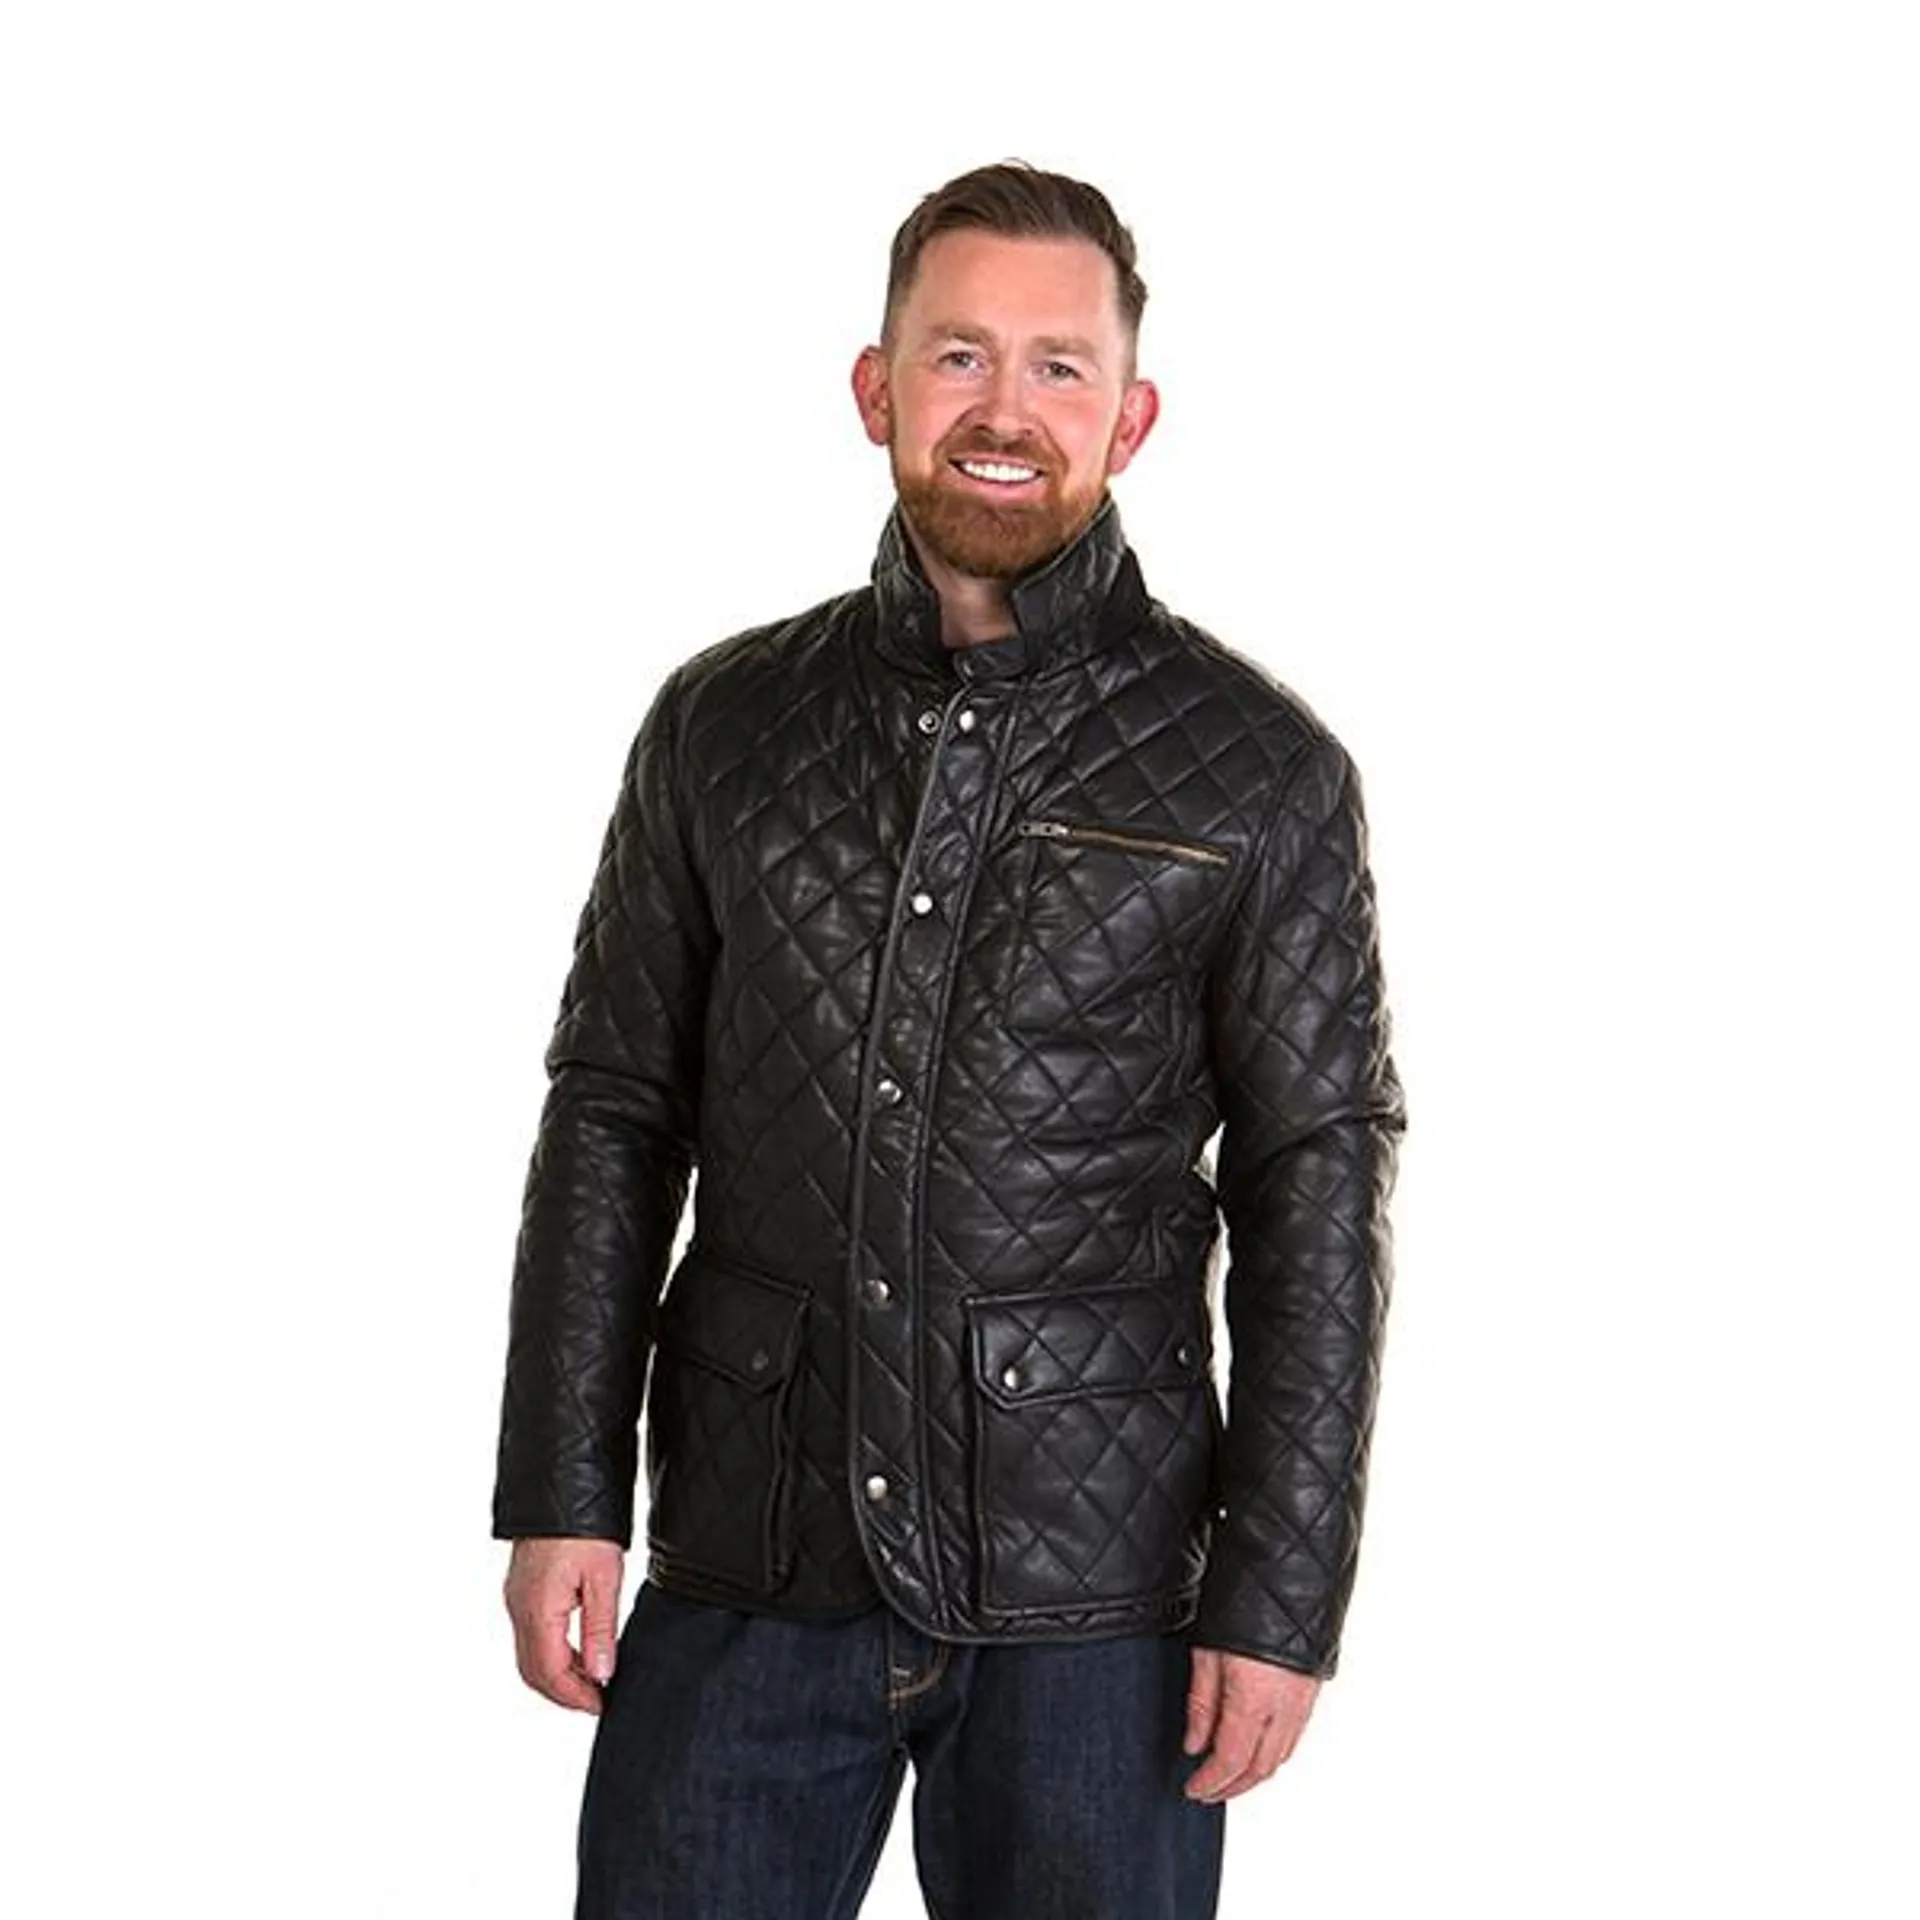 Woodland Leather Gents Criss Cross Jacket